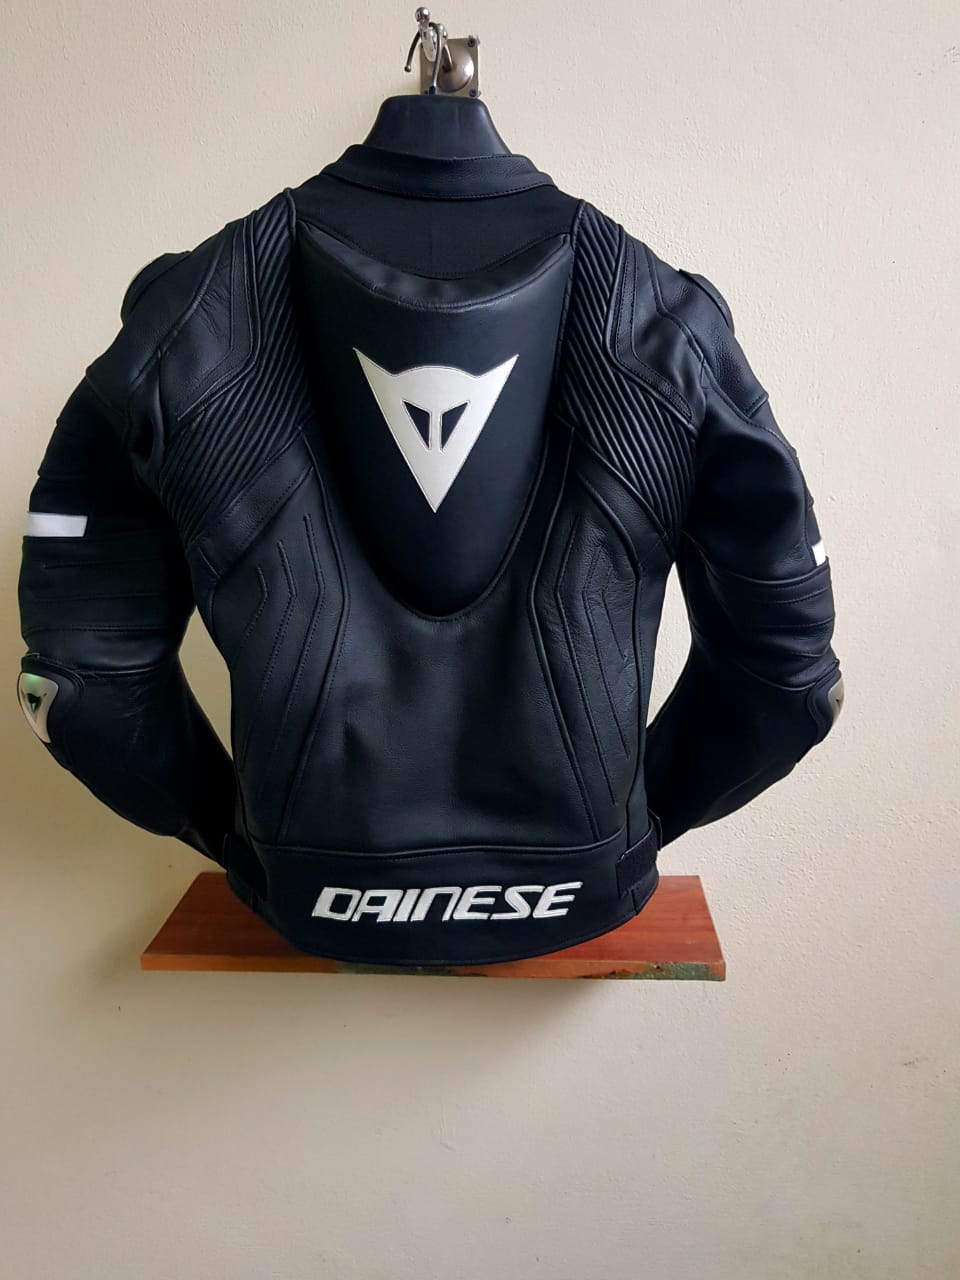 Custom jacket Black White Avro 4 CE Protected Motorcycle Cowhide Leather Racing Jacket Back